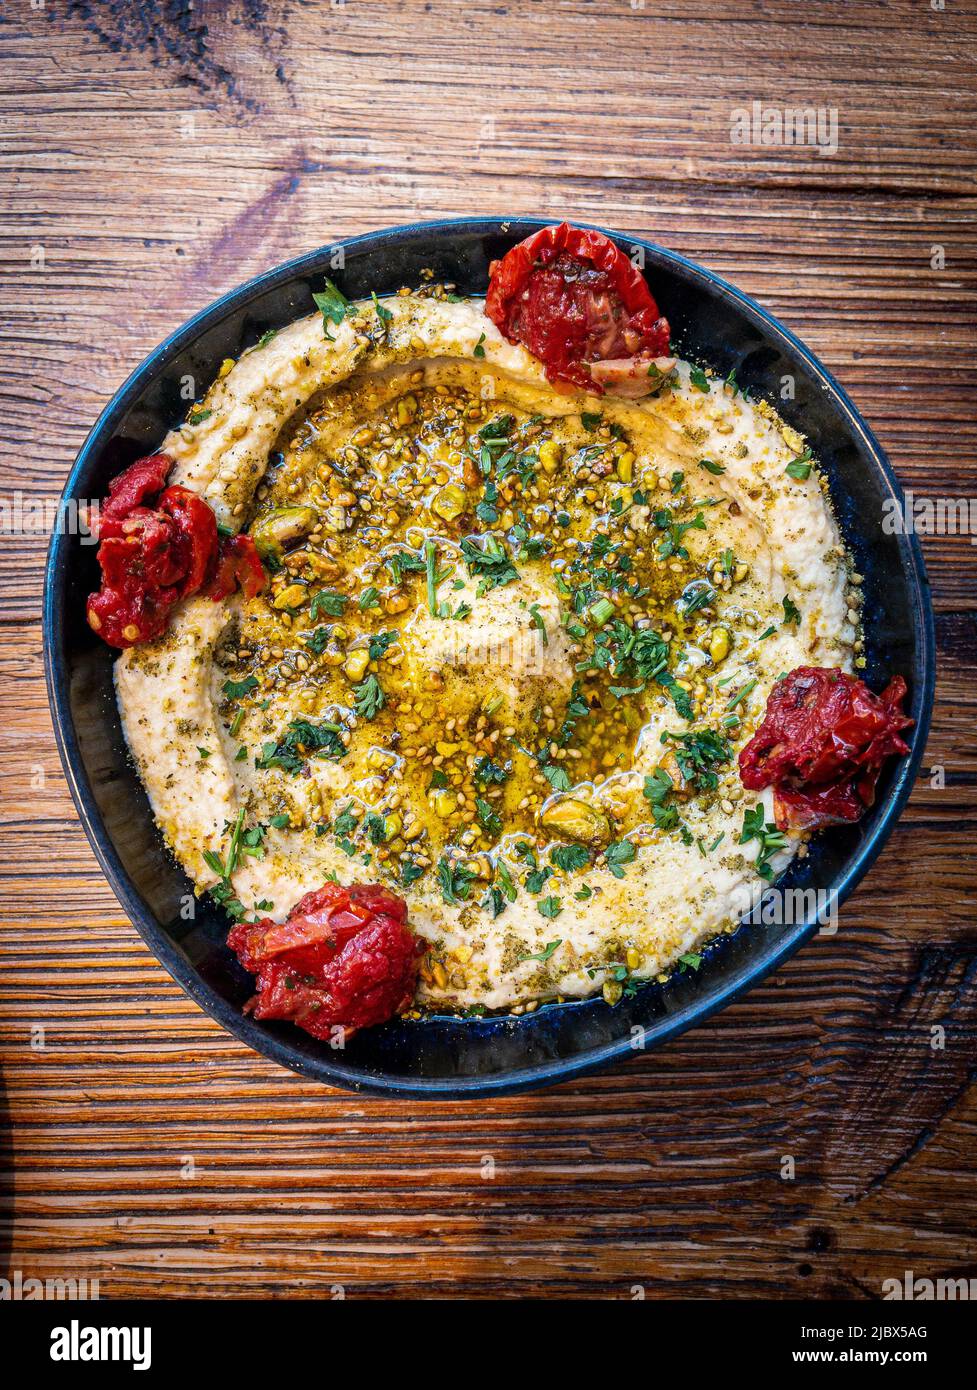 https://c8.alamy.com/comp/2JBX5AG/hummus-topped-with-sesame-seeds-olive-oil-and-chopped-cilantro-2JBX5AG.jpg